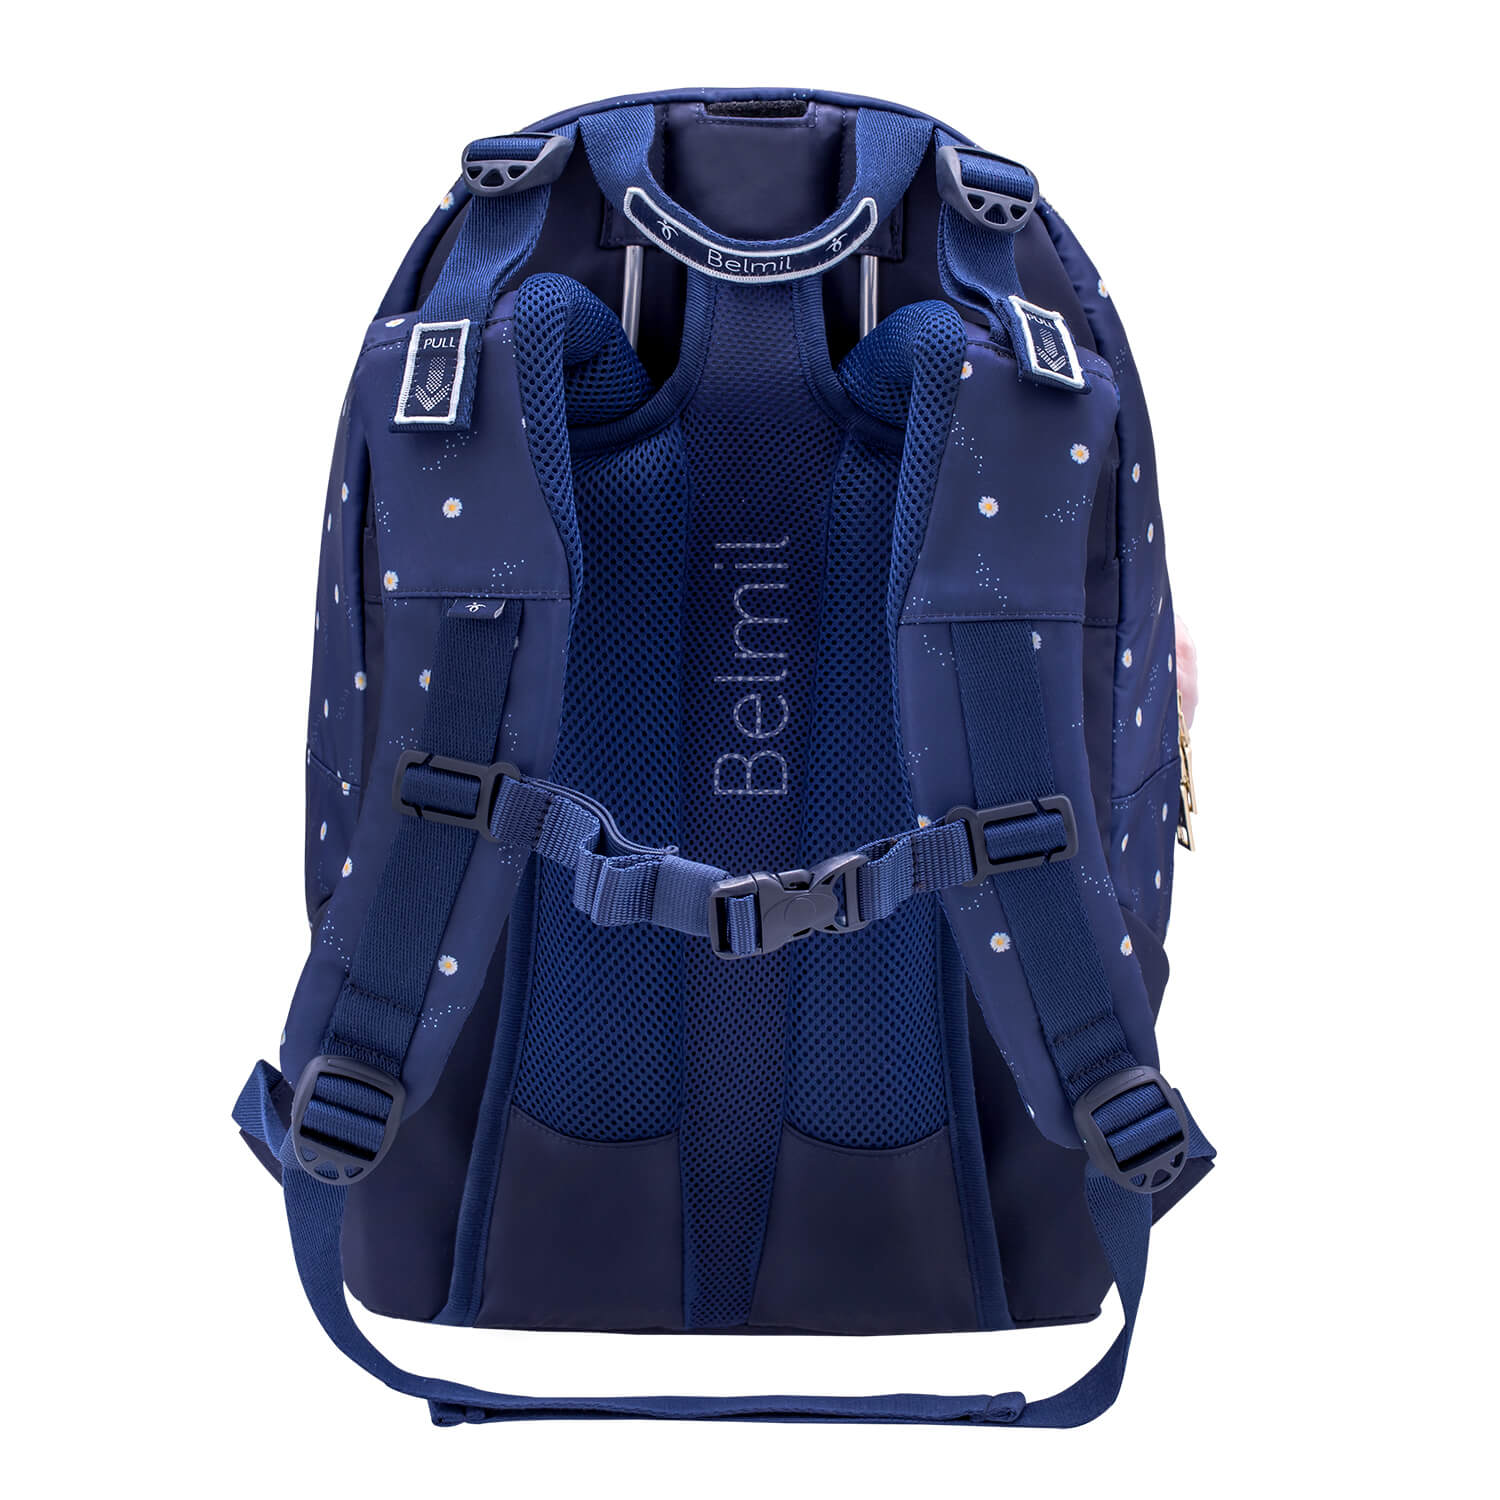 Premium Backpack & Fanny Pack Daisy Schoolbag 2pcs.